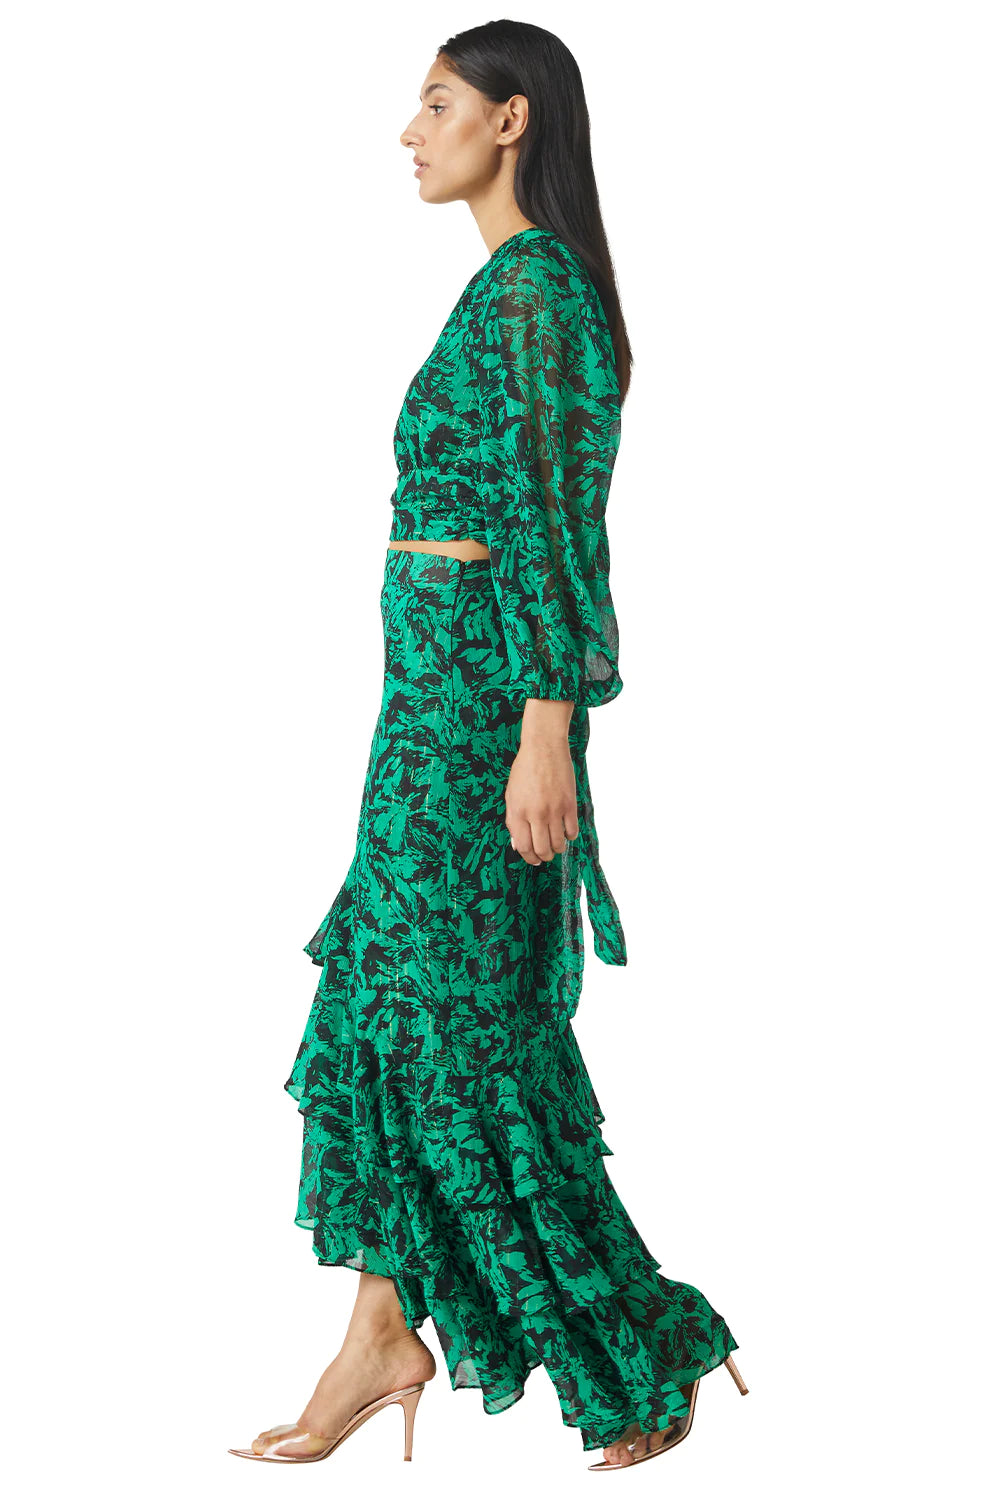 Veronique skirt - emerald abstract